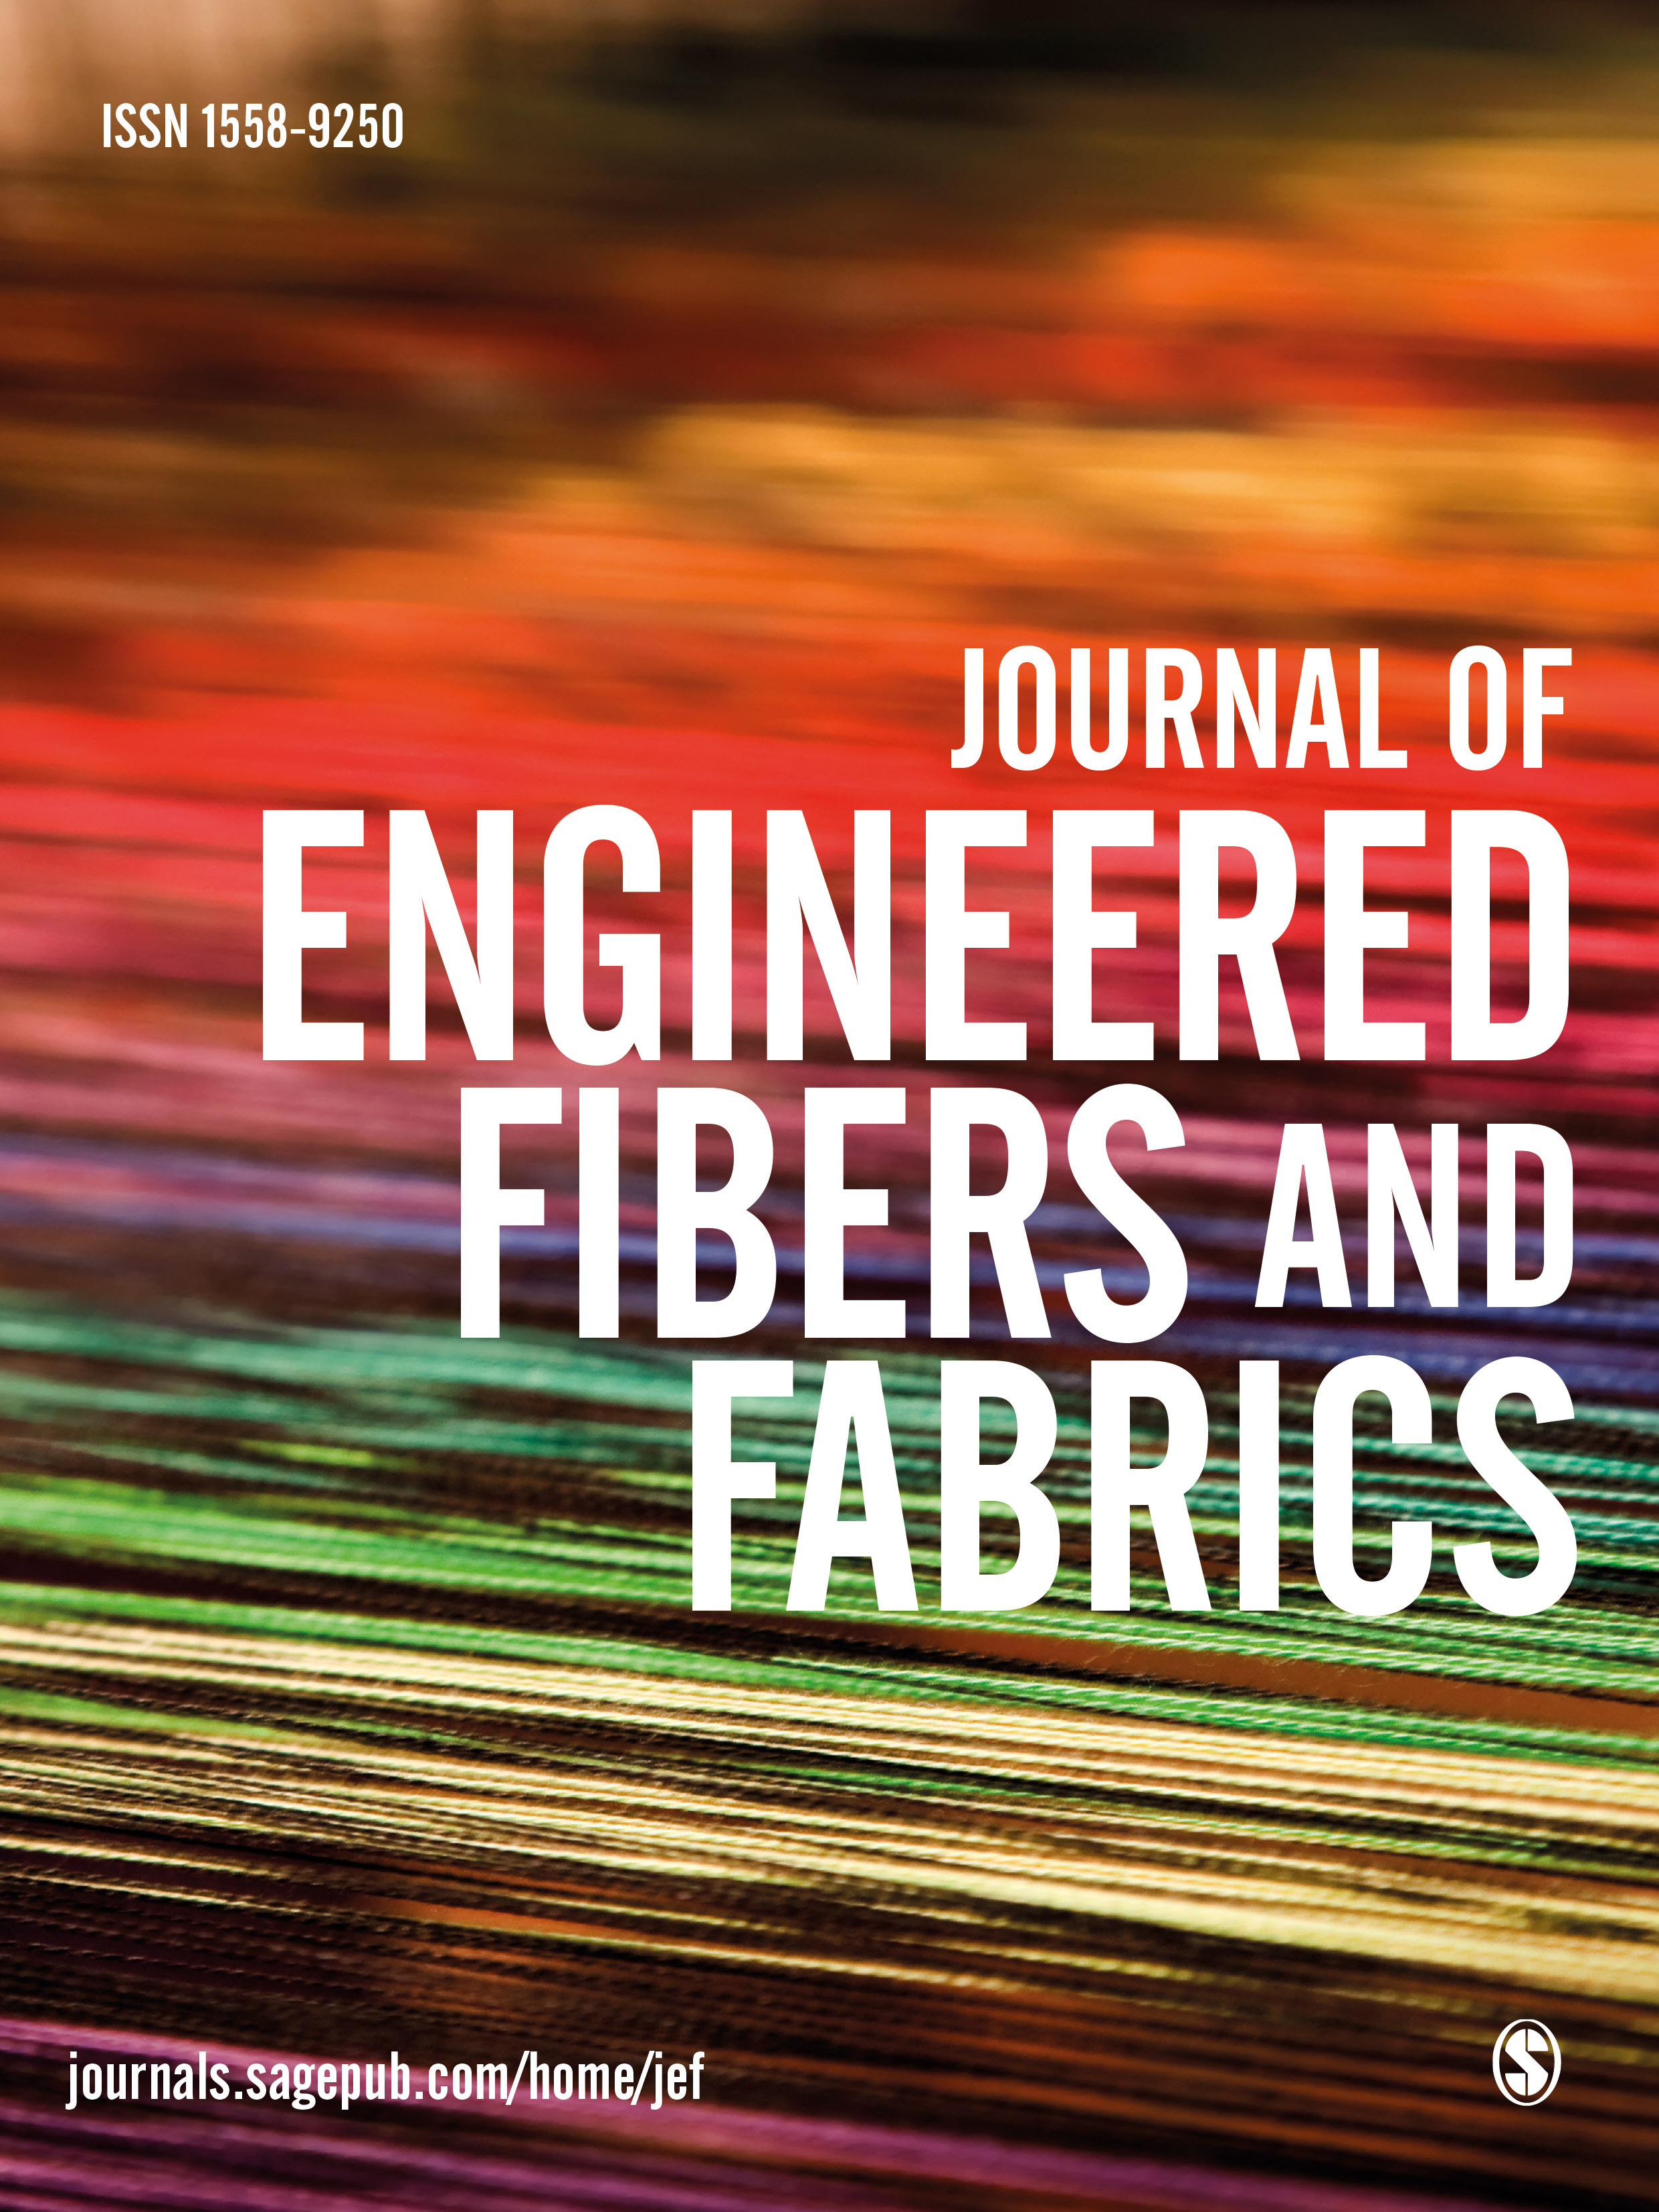  Journal of Engineered Fibers and Fabrics